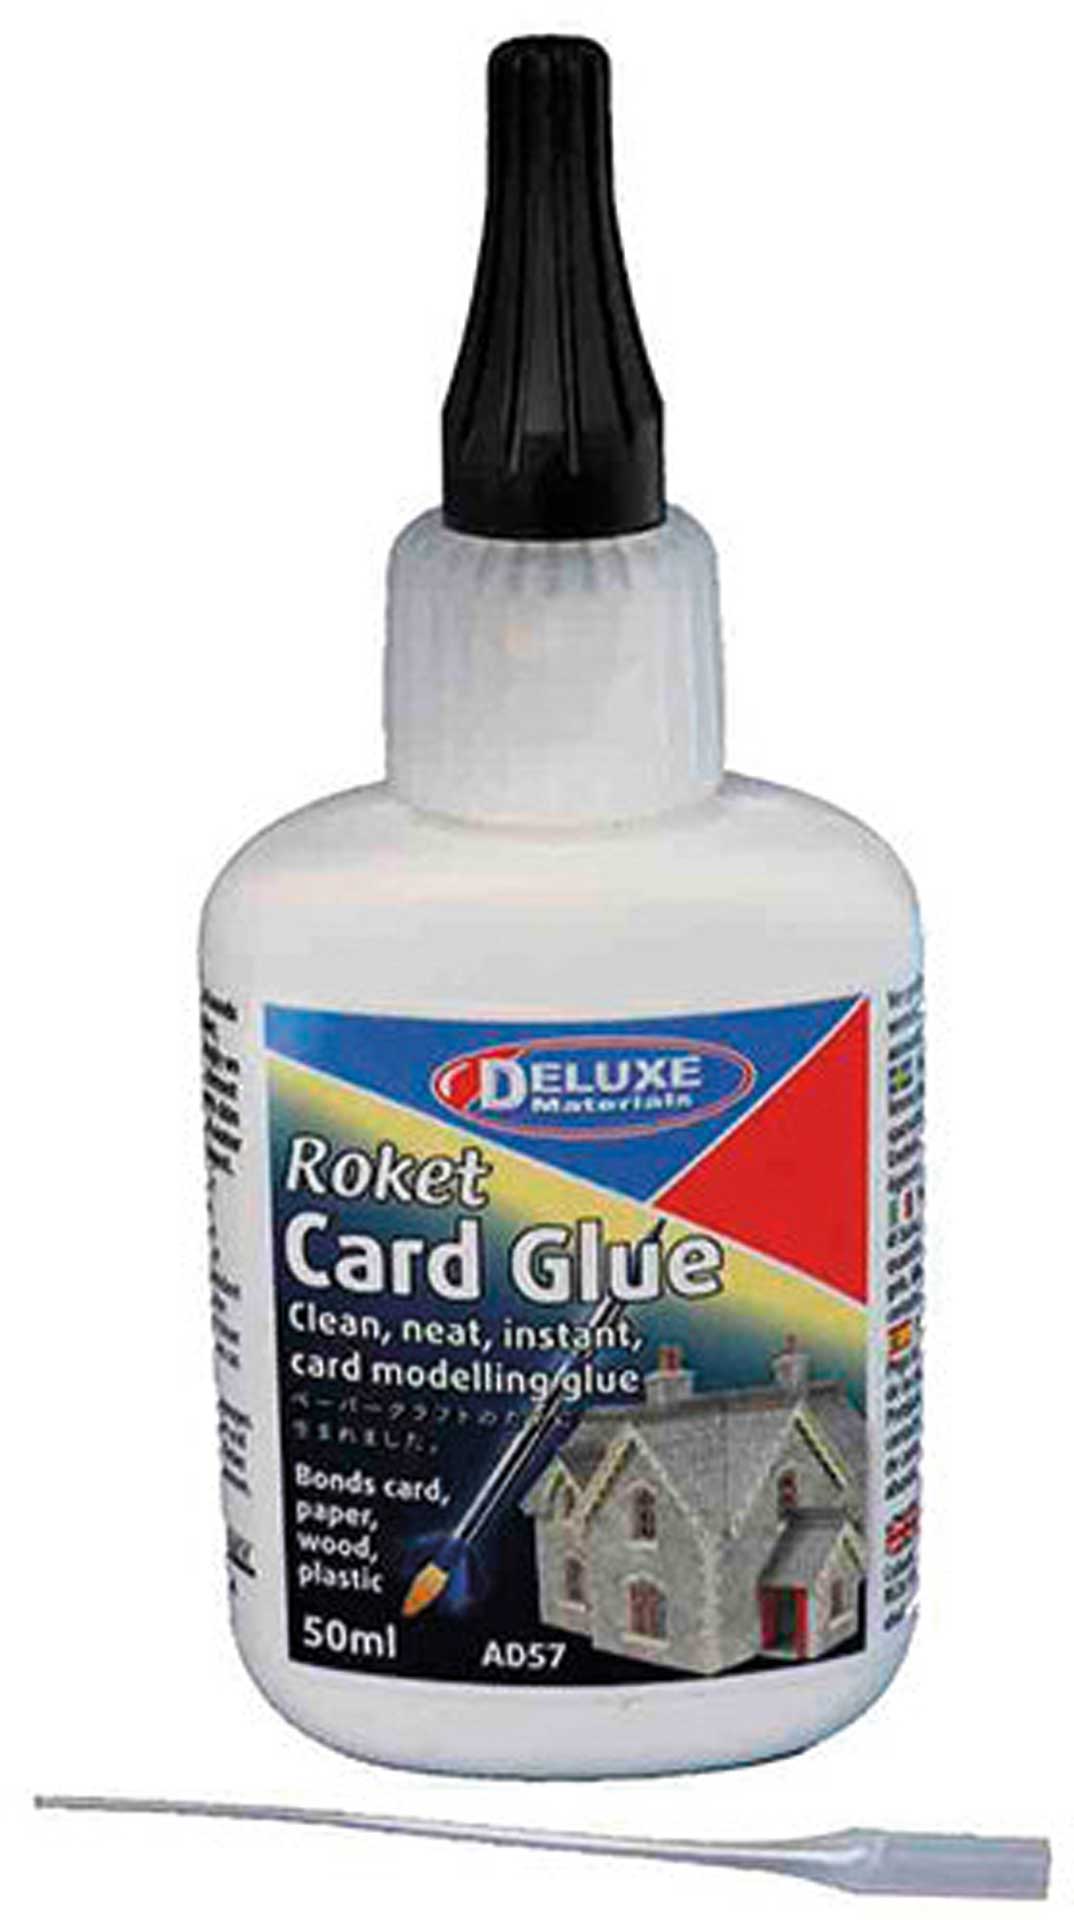 DELUXE Roket Card Glue 50ml für Karton, Papier. u.ä.